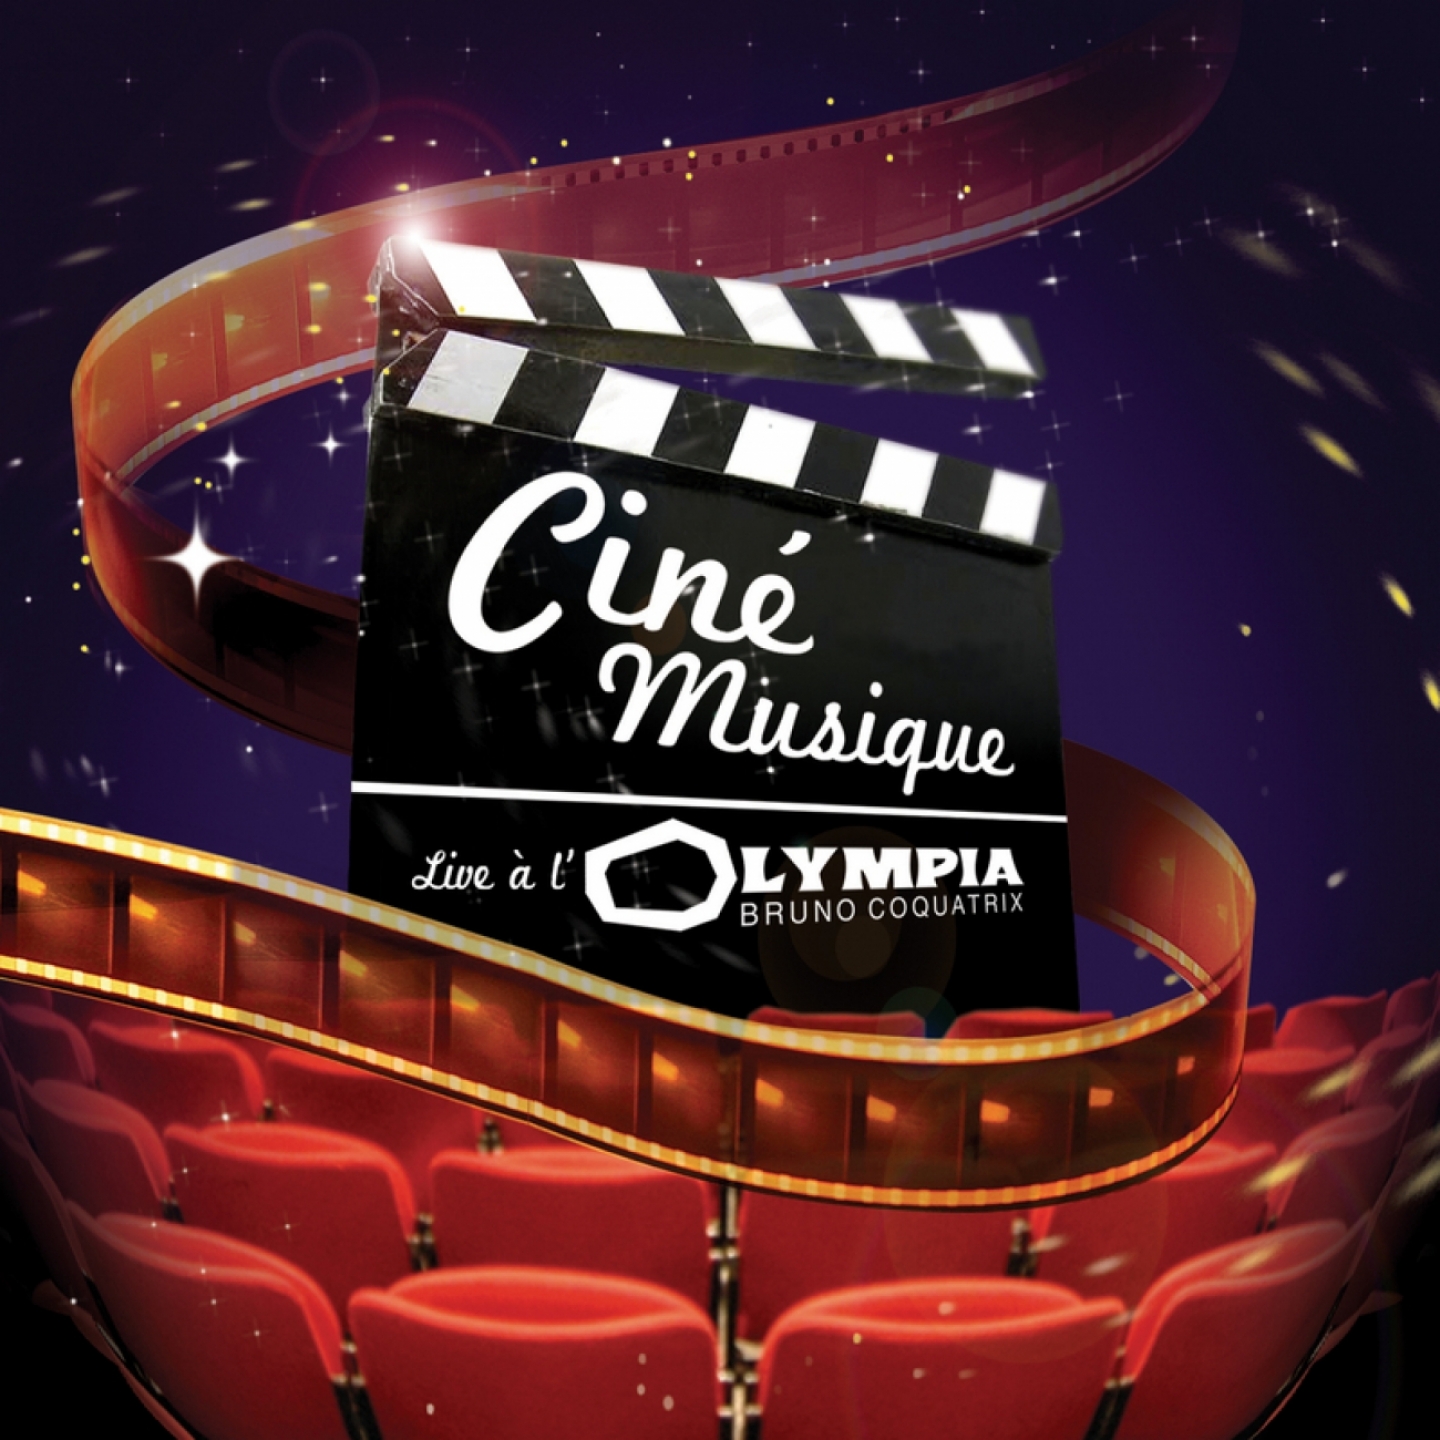 Cine musique Live a l' Olympia